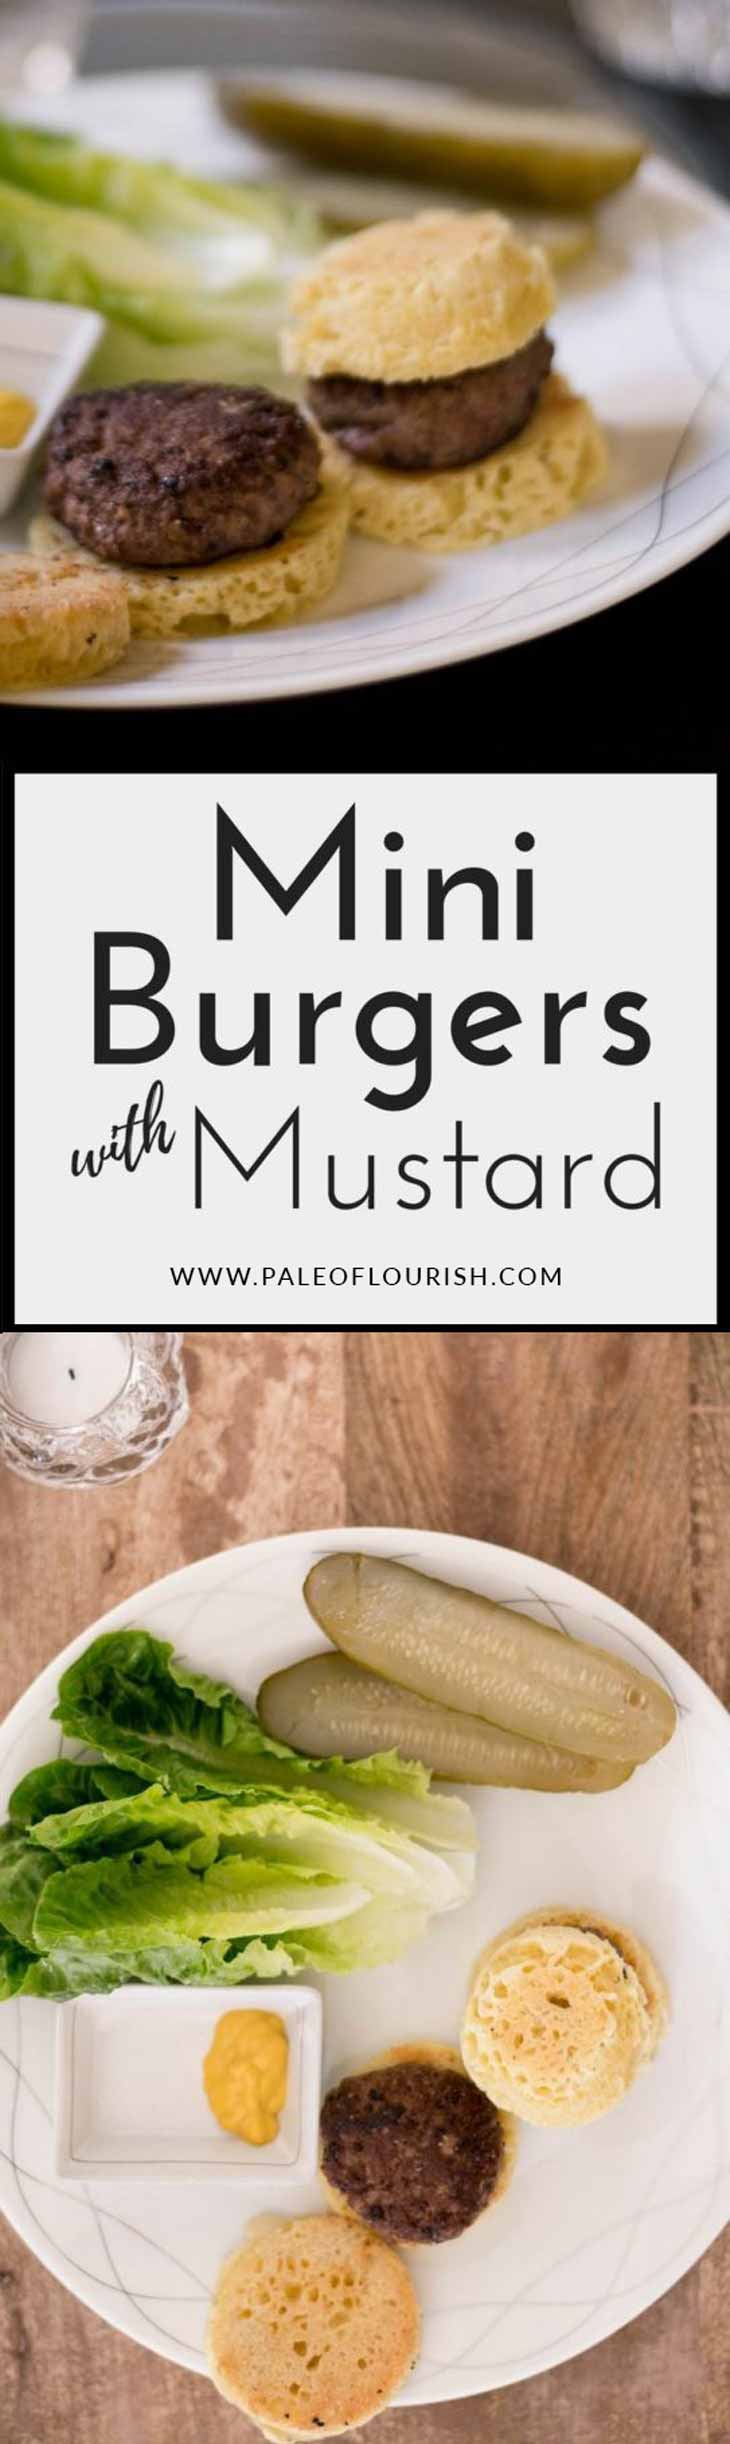 Mini Burgers with Mustard #paleo #recipes #glutenfree https://paleoflourish.com/mini-burgers-with-mustard/